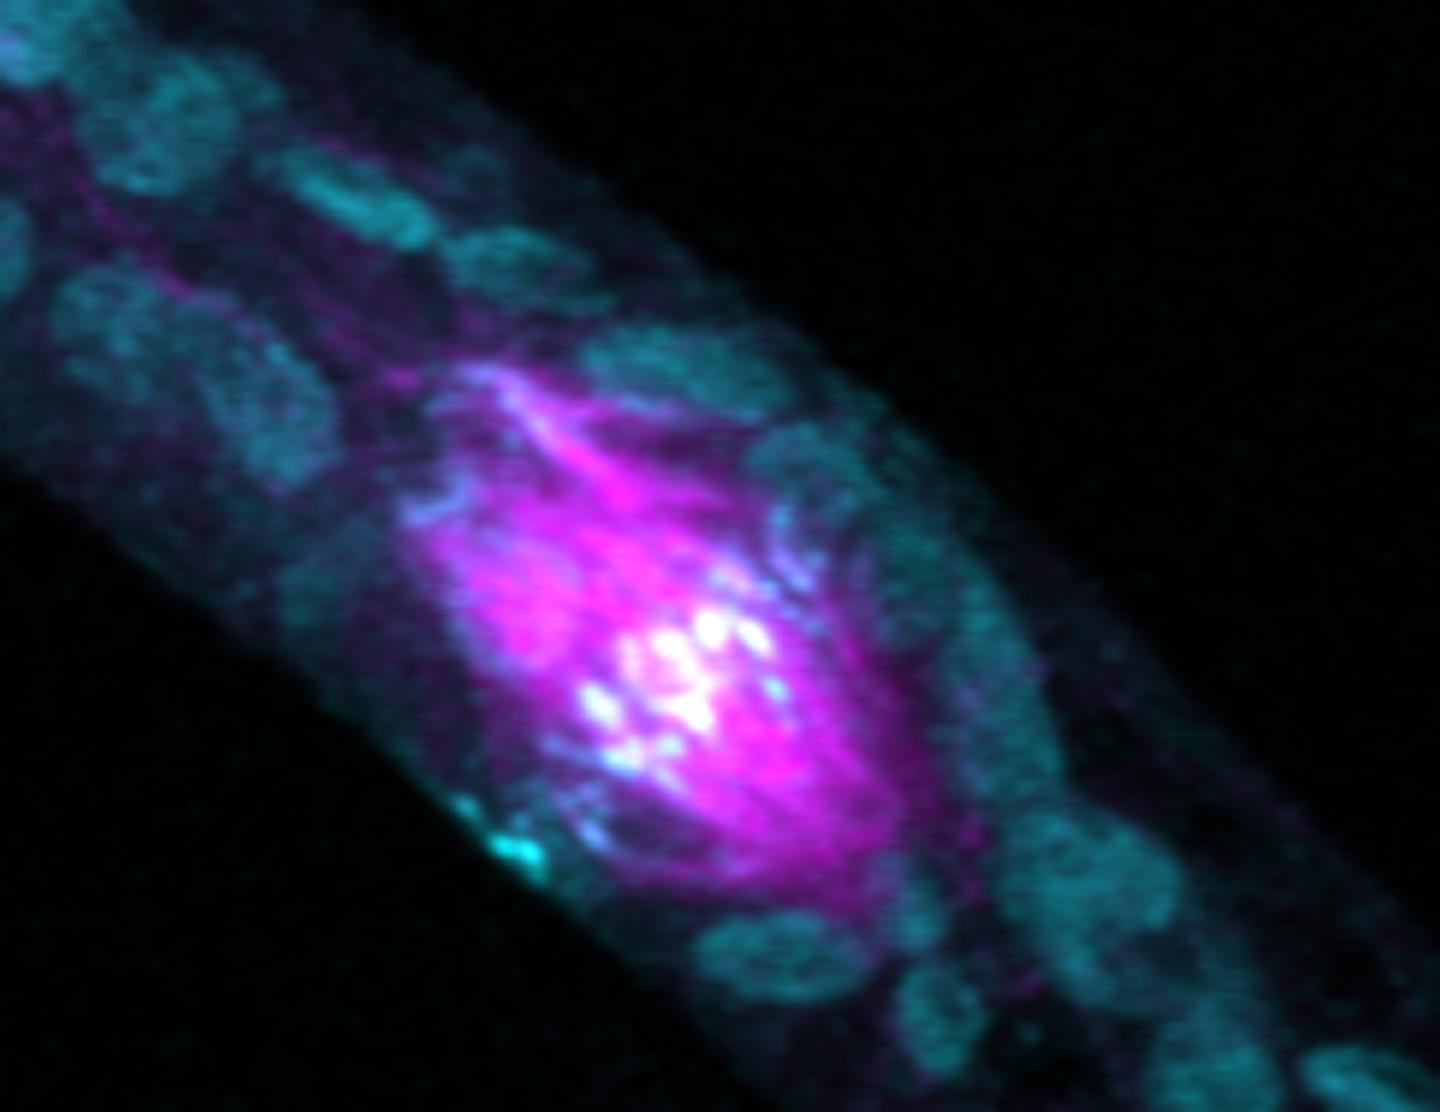 Phragmoplast with Microtubules and Myosin